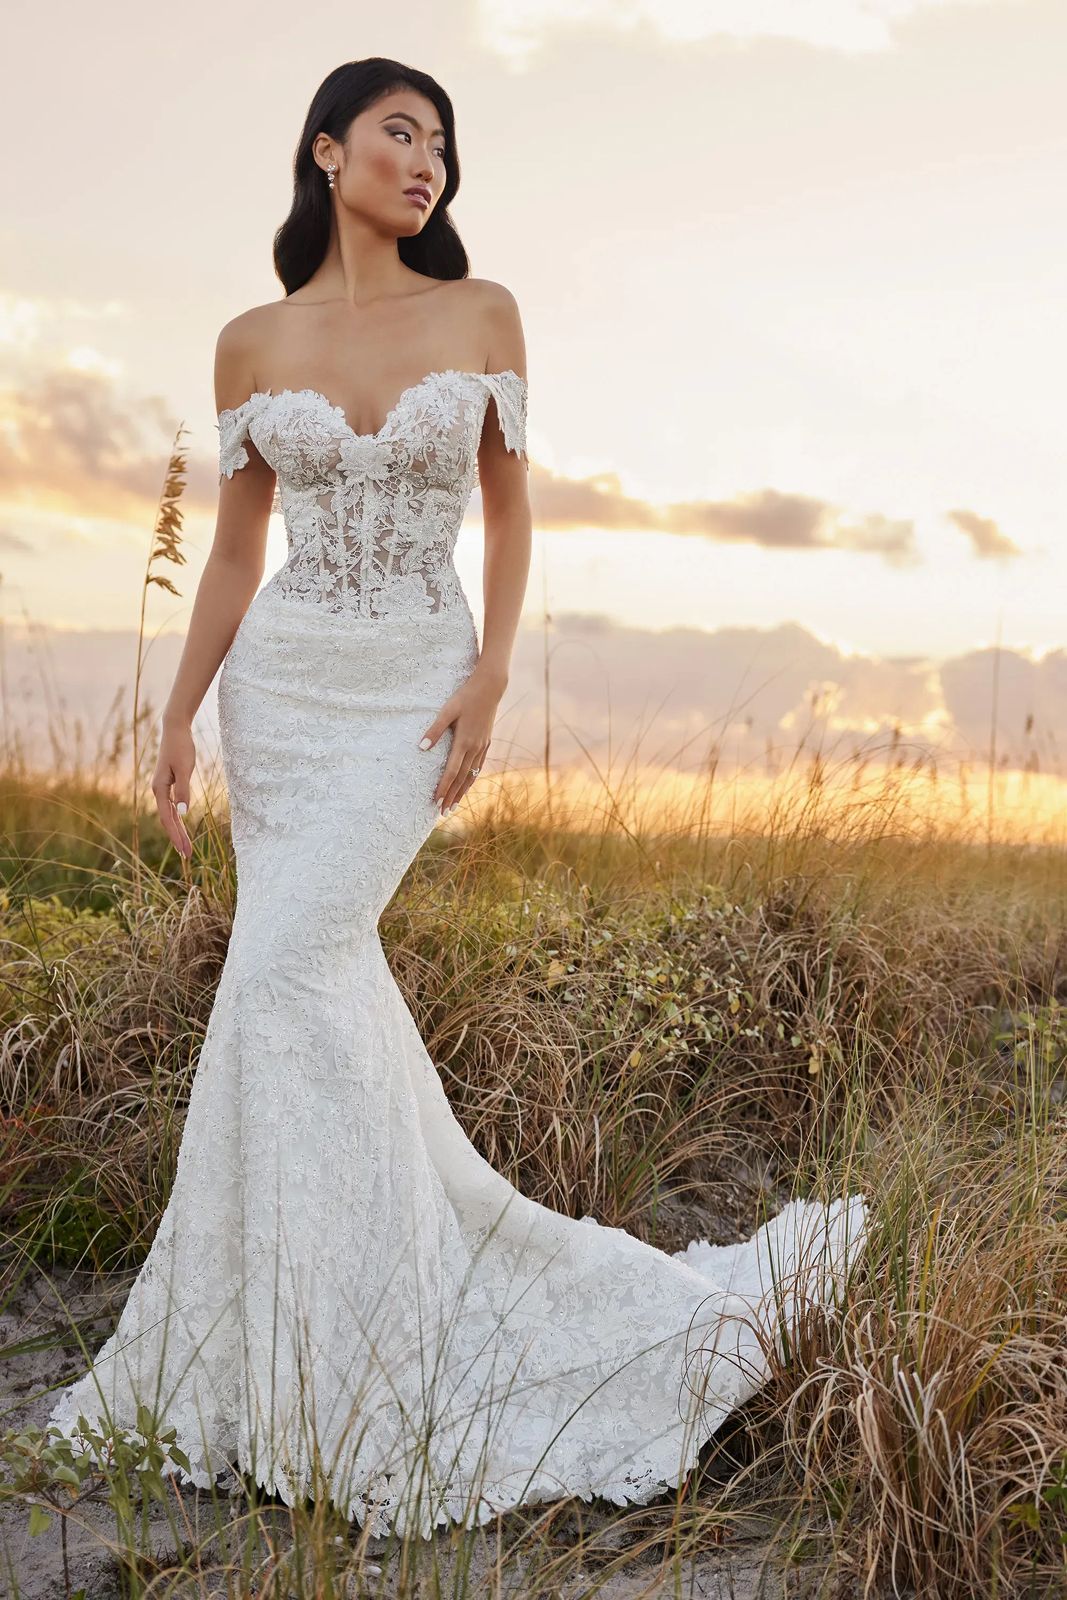 corset top wedding dress